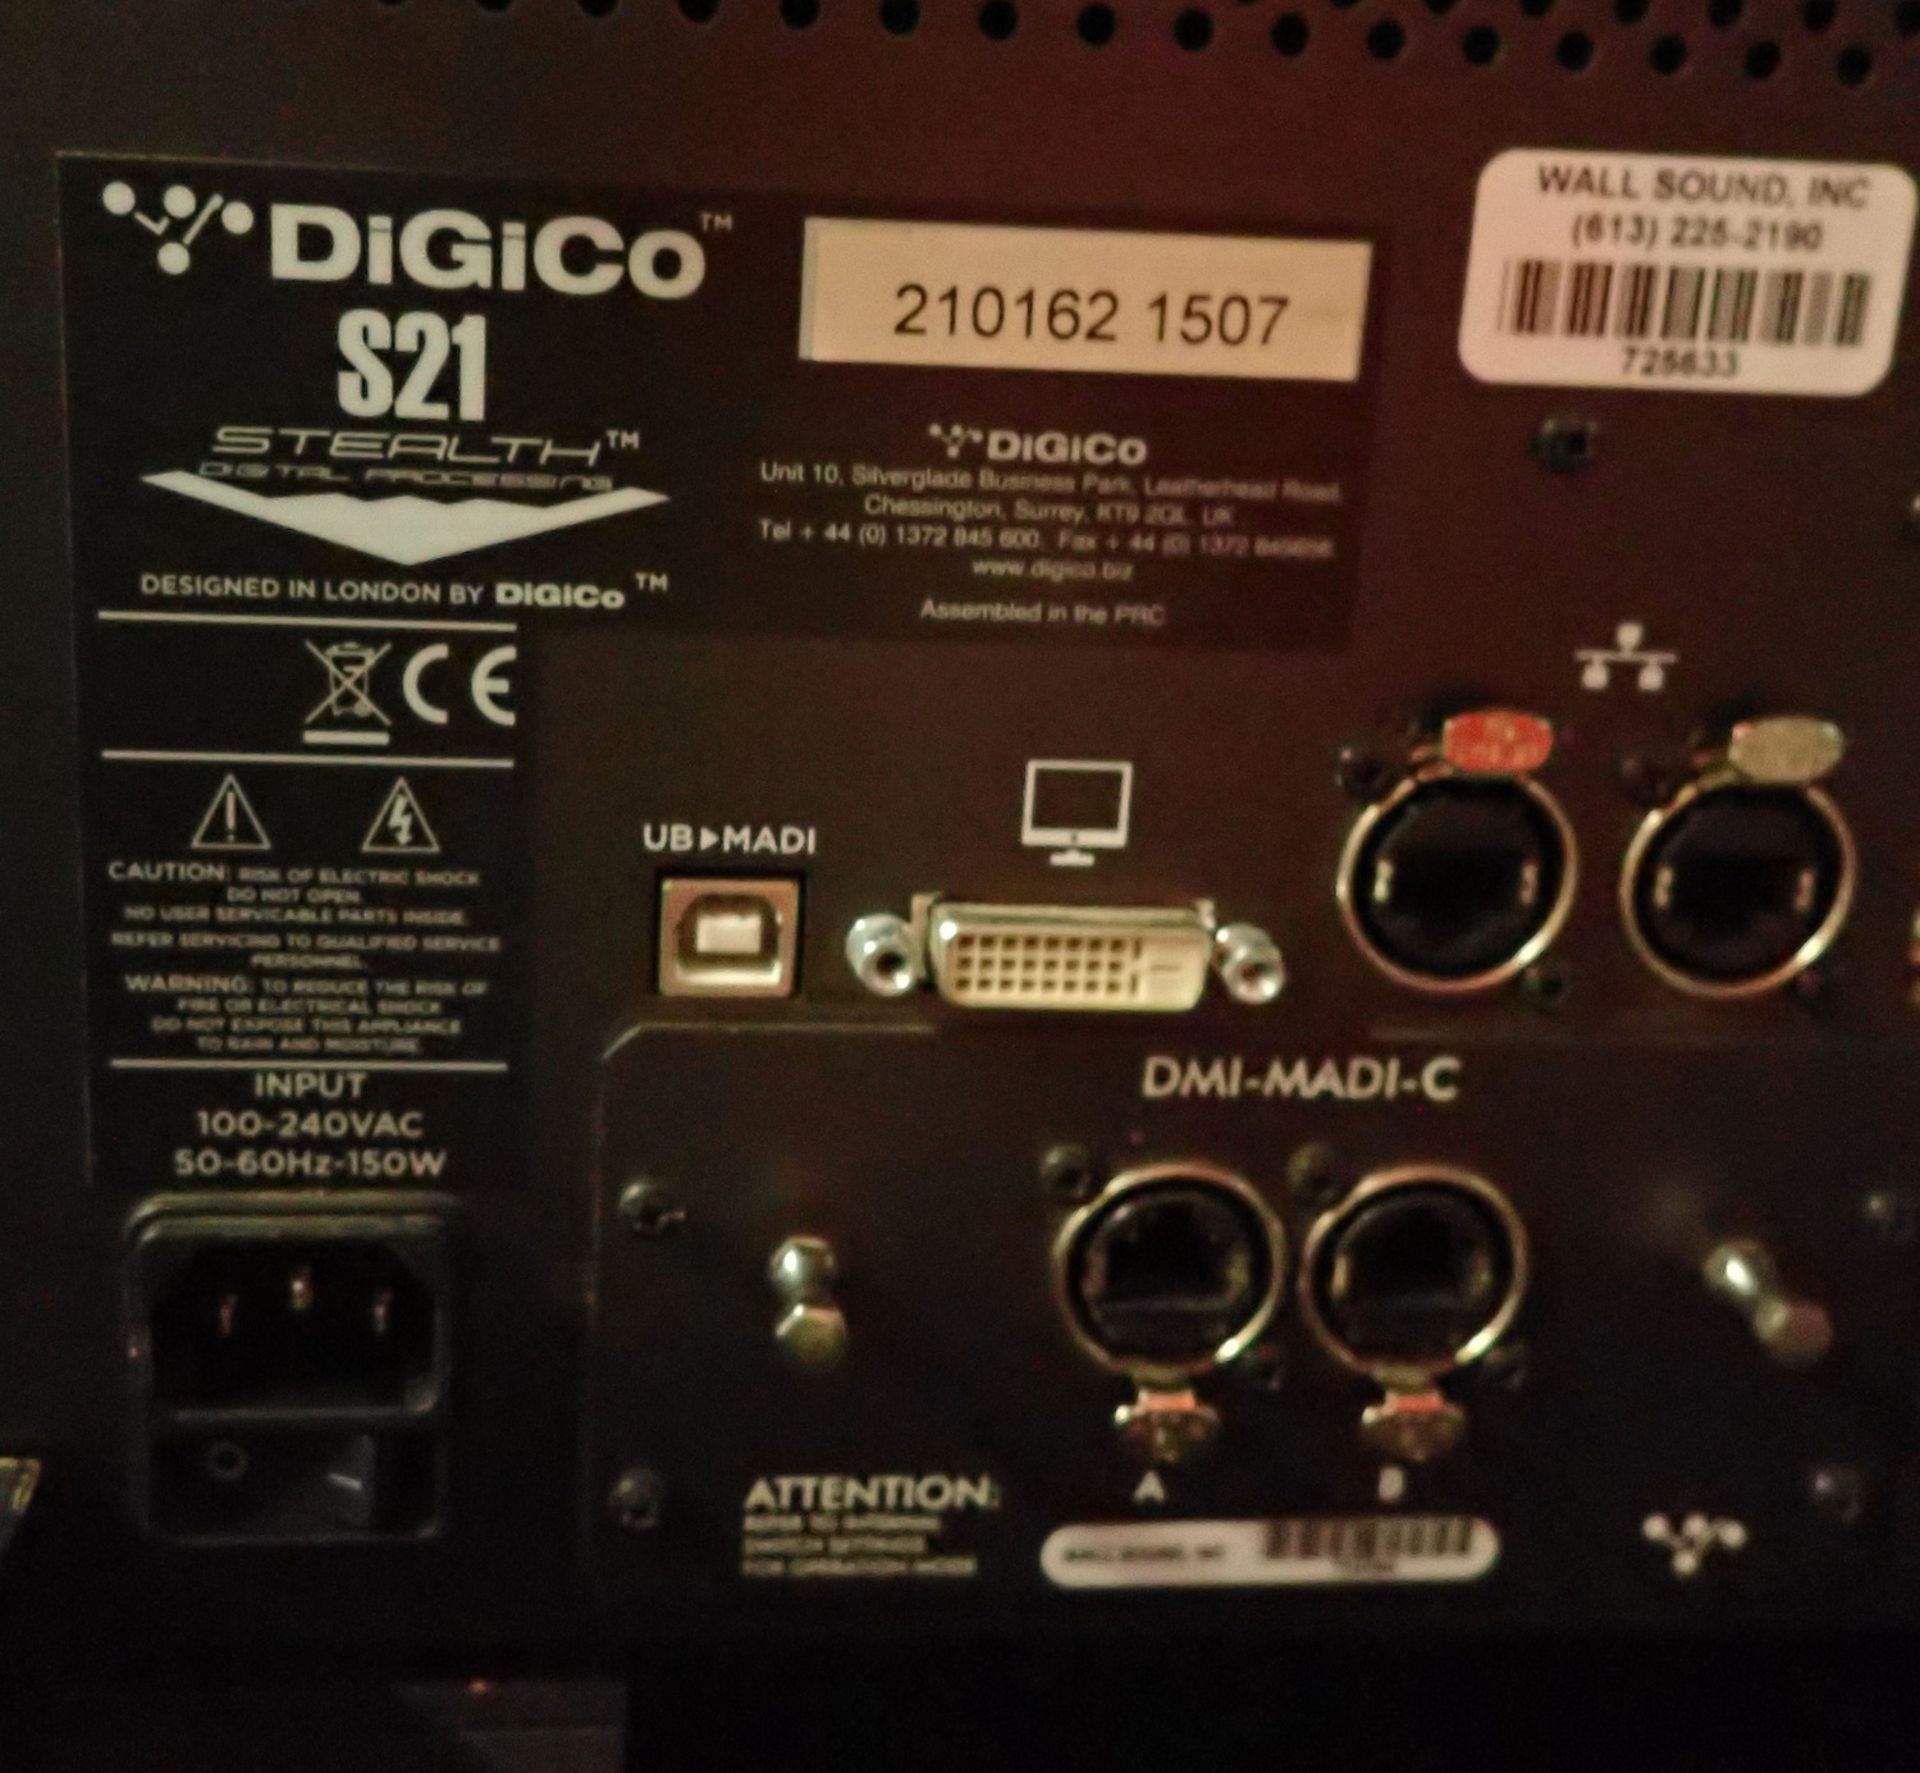 DIGICO S21 STEALTH 24-CHANNEL DIGITAL MIXING CONSOLE C/W DMI-MADA-C CARD S/N 210162 1507, HARD CASE - Bild 4 aus 4